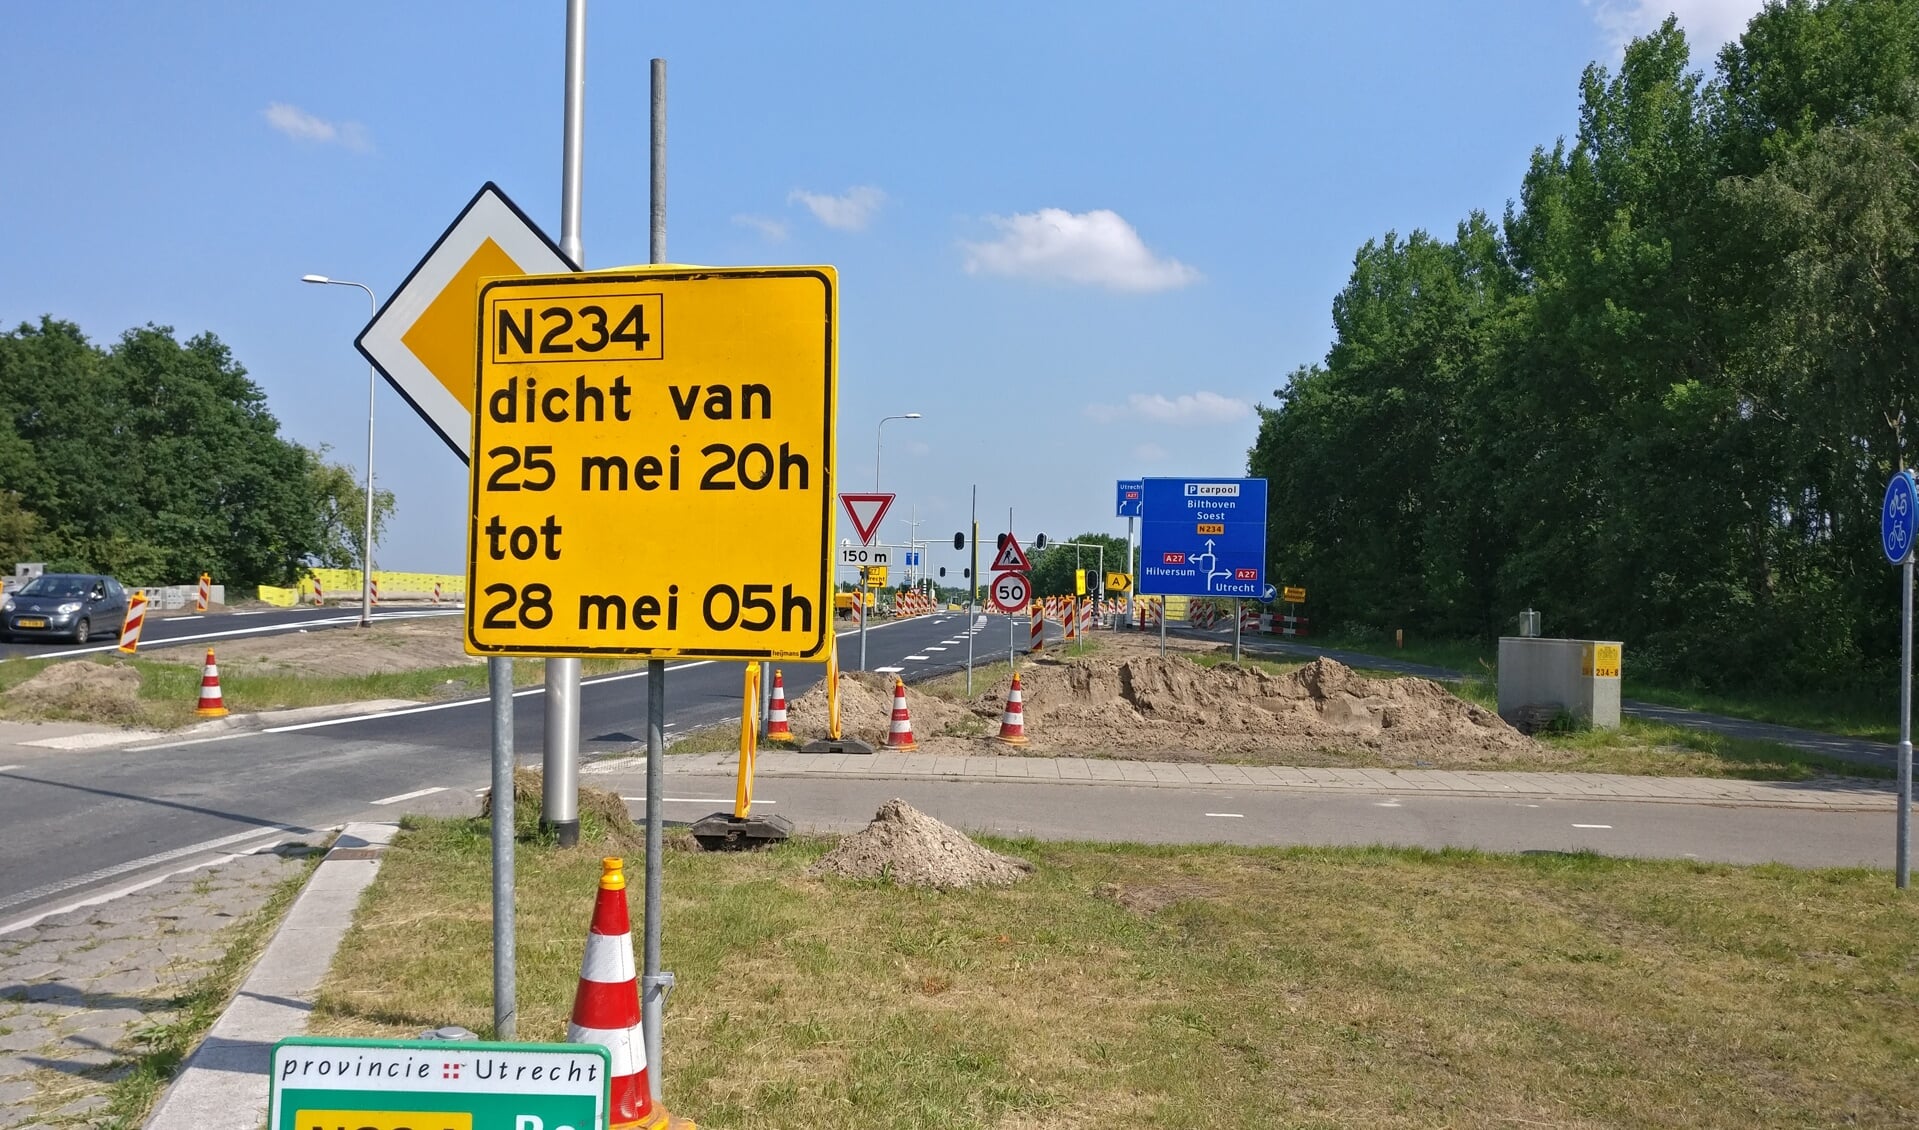 Naast de aansluiting Bilthoven (af- en oprit) is ook de N234 (Provinciale weg N234 van Soest naar Groenekan) van vrijdag 25 mei vanaf 20.00 uur tot maandag 28 mei 05.00 uur dicht.